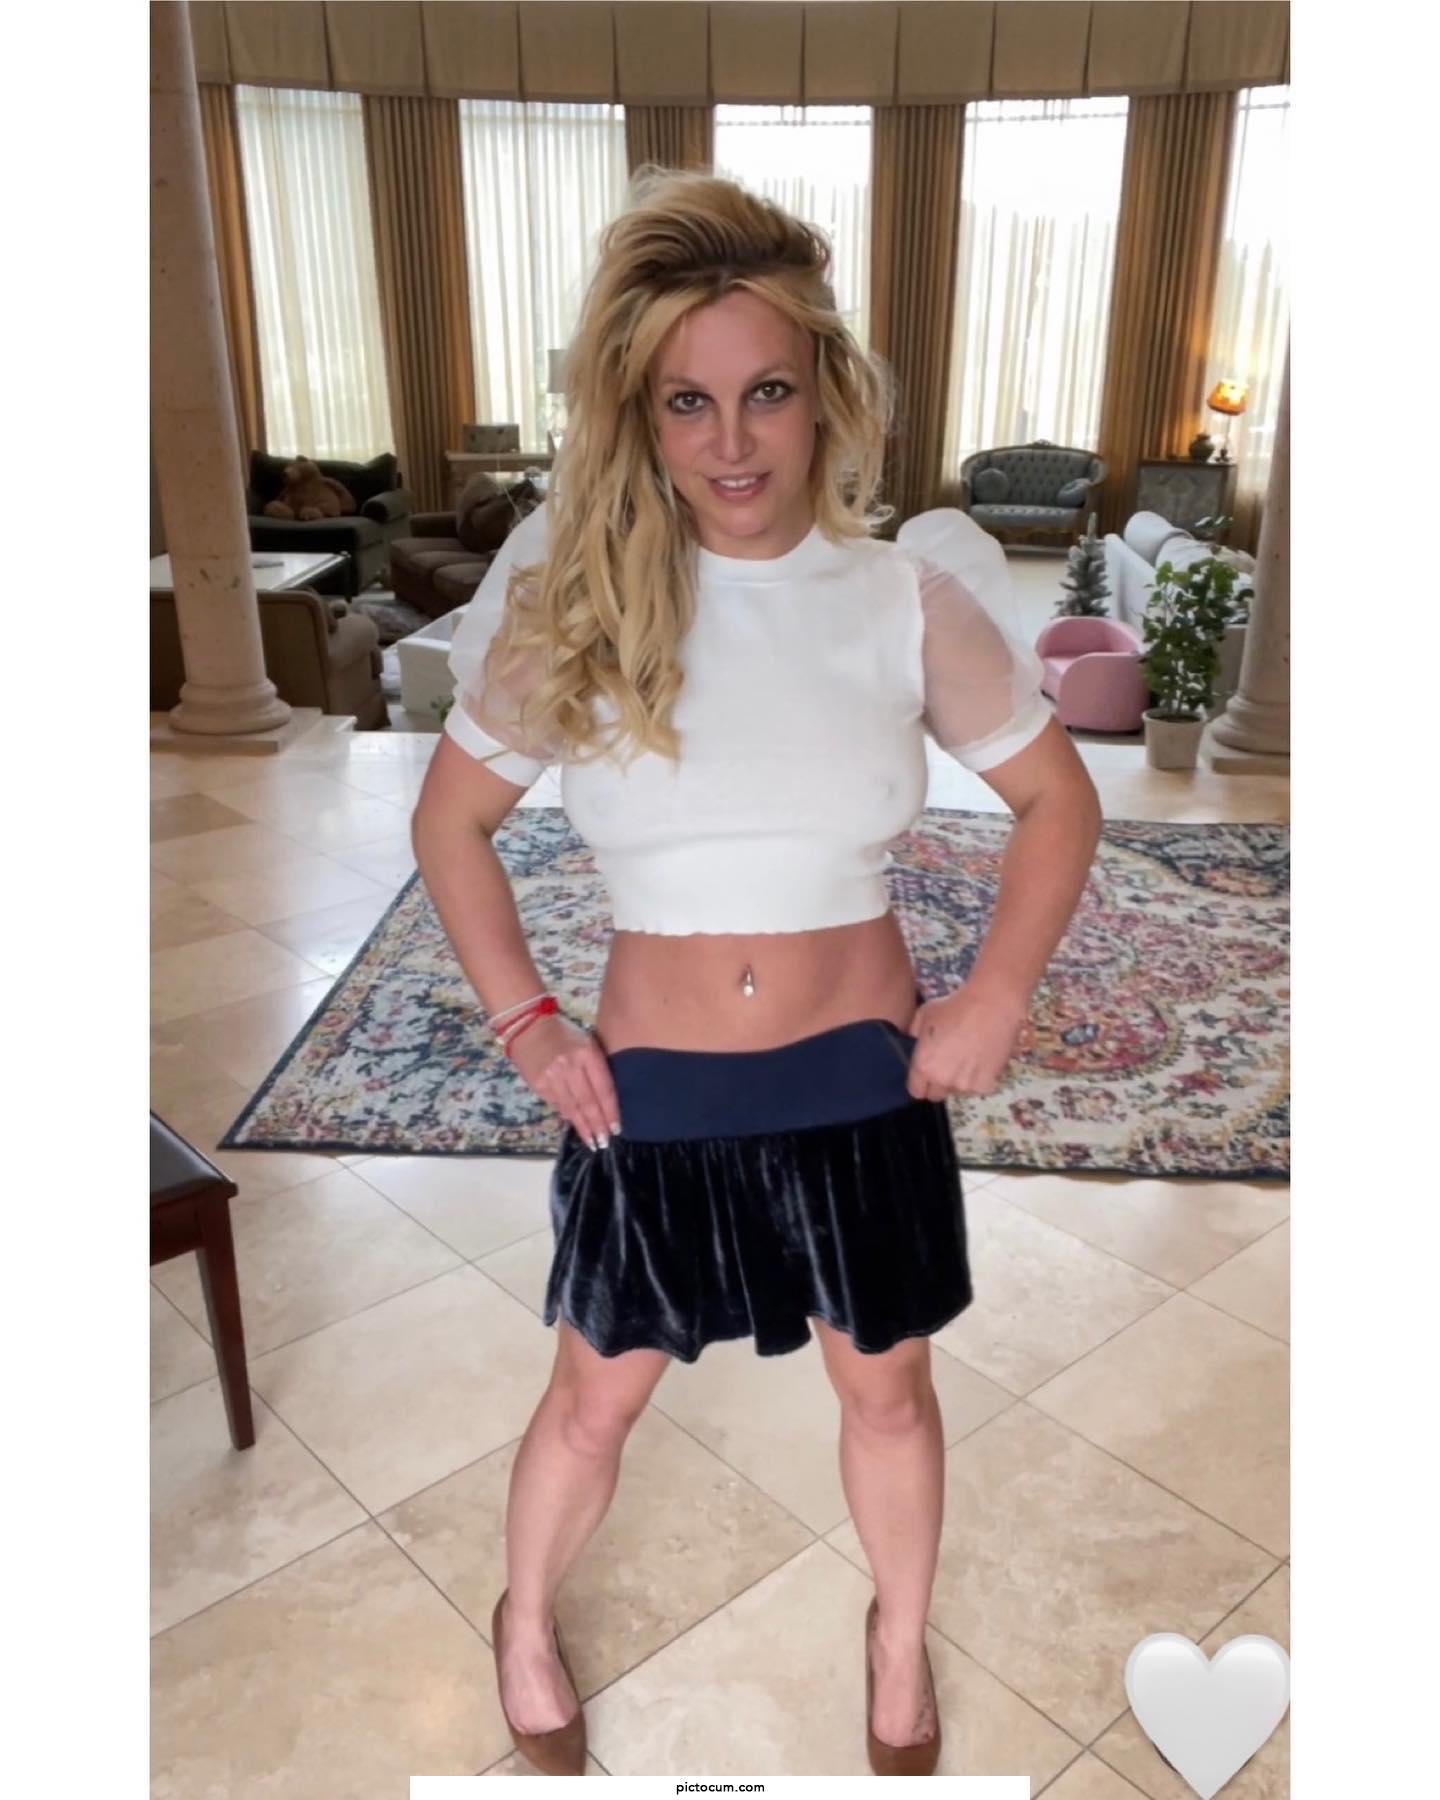 Britney Spears pokies in white top